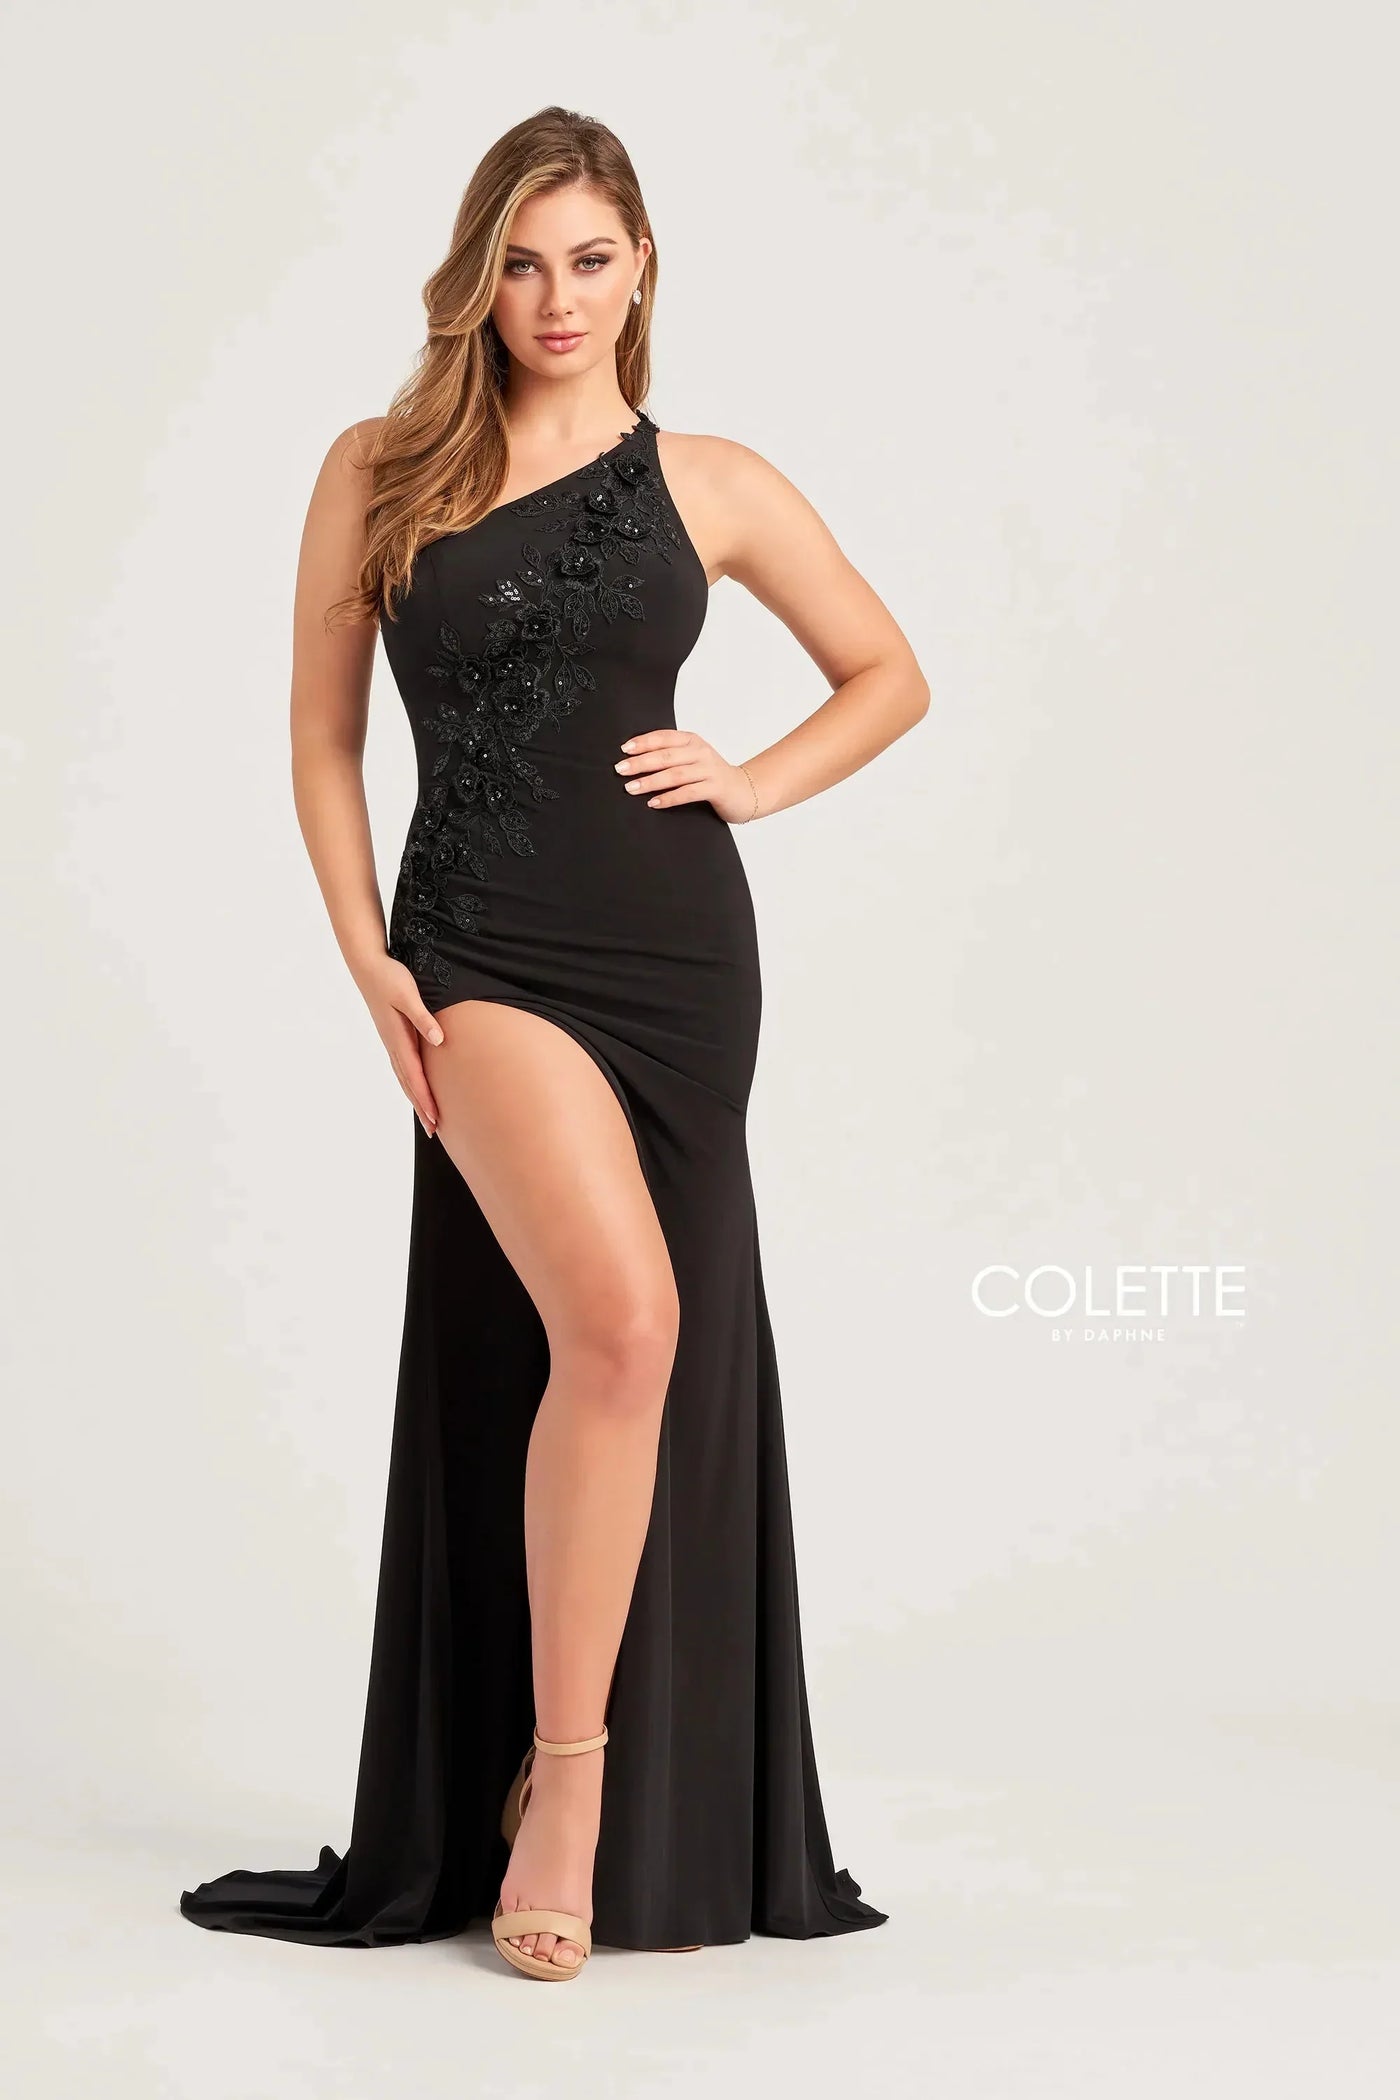 Colette By Daphne CL5108 - Applique High Slit Prom Dress